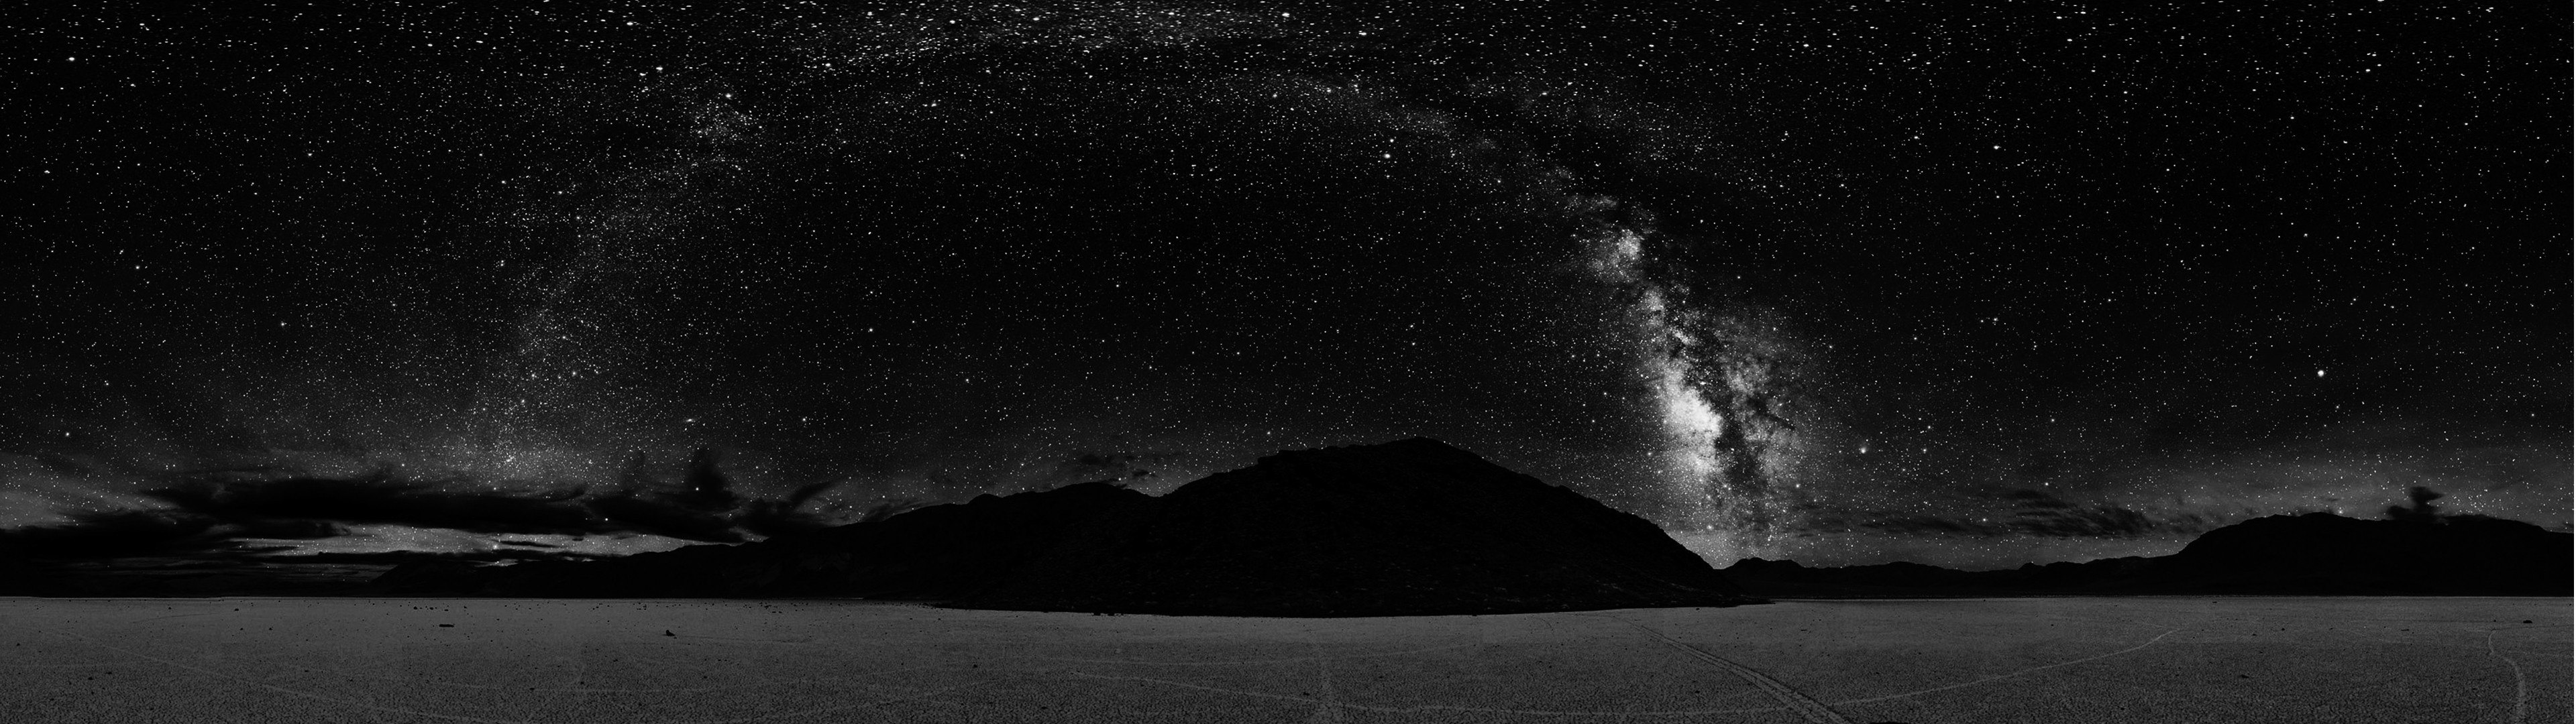 General 3840x1080 multiple display stars landscape monochrome sky